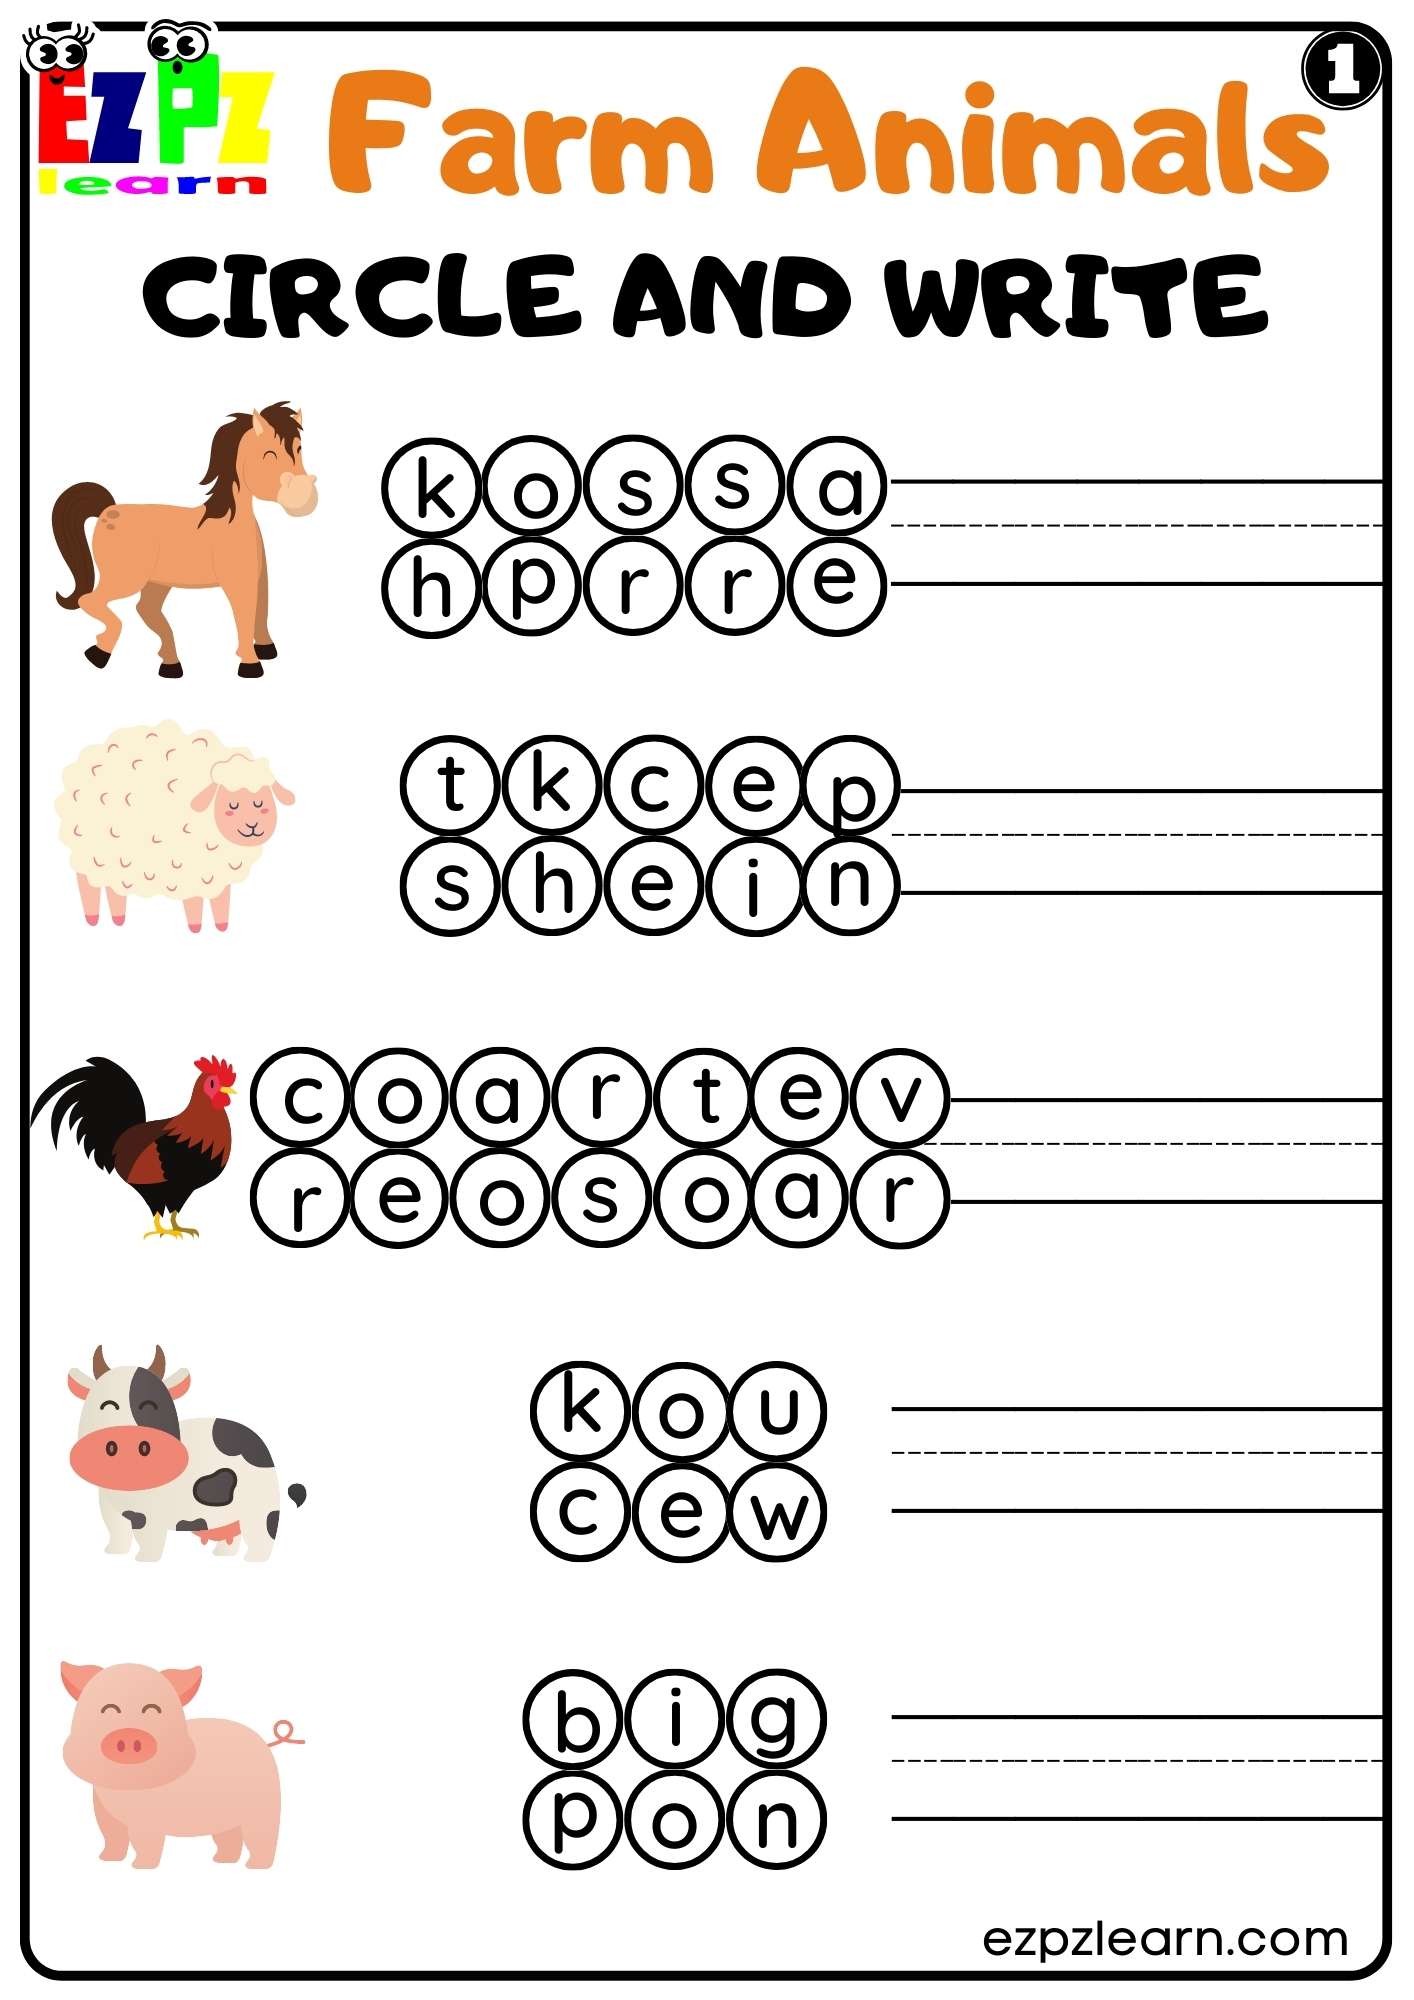 Farm Animals Circle and Write 